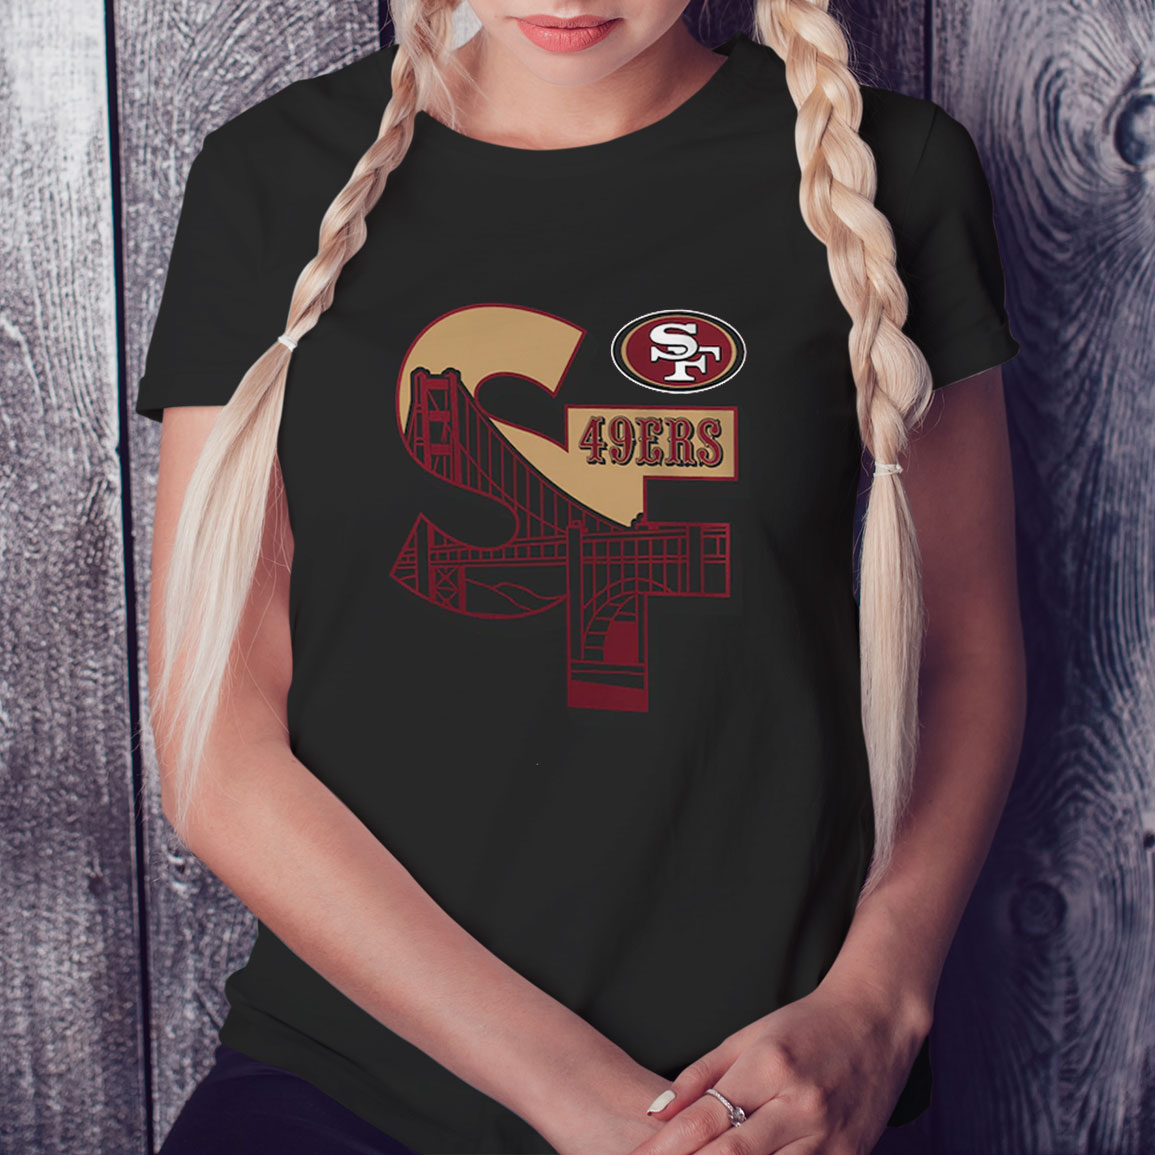 ladies 49ers shirt